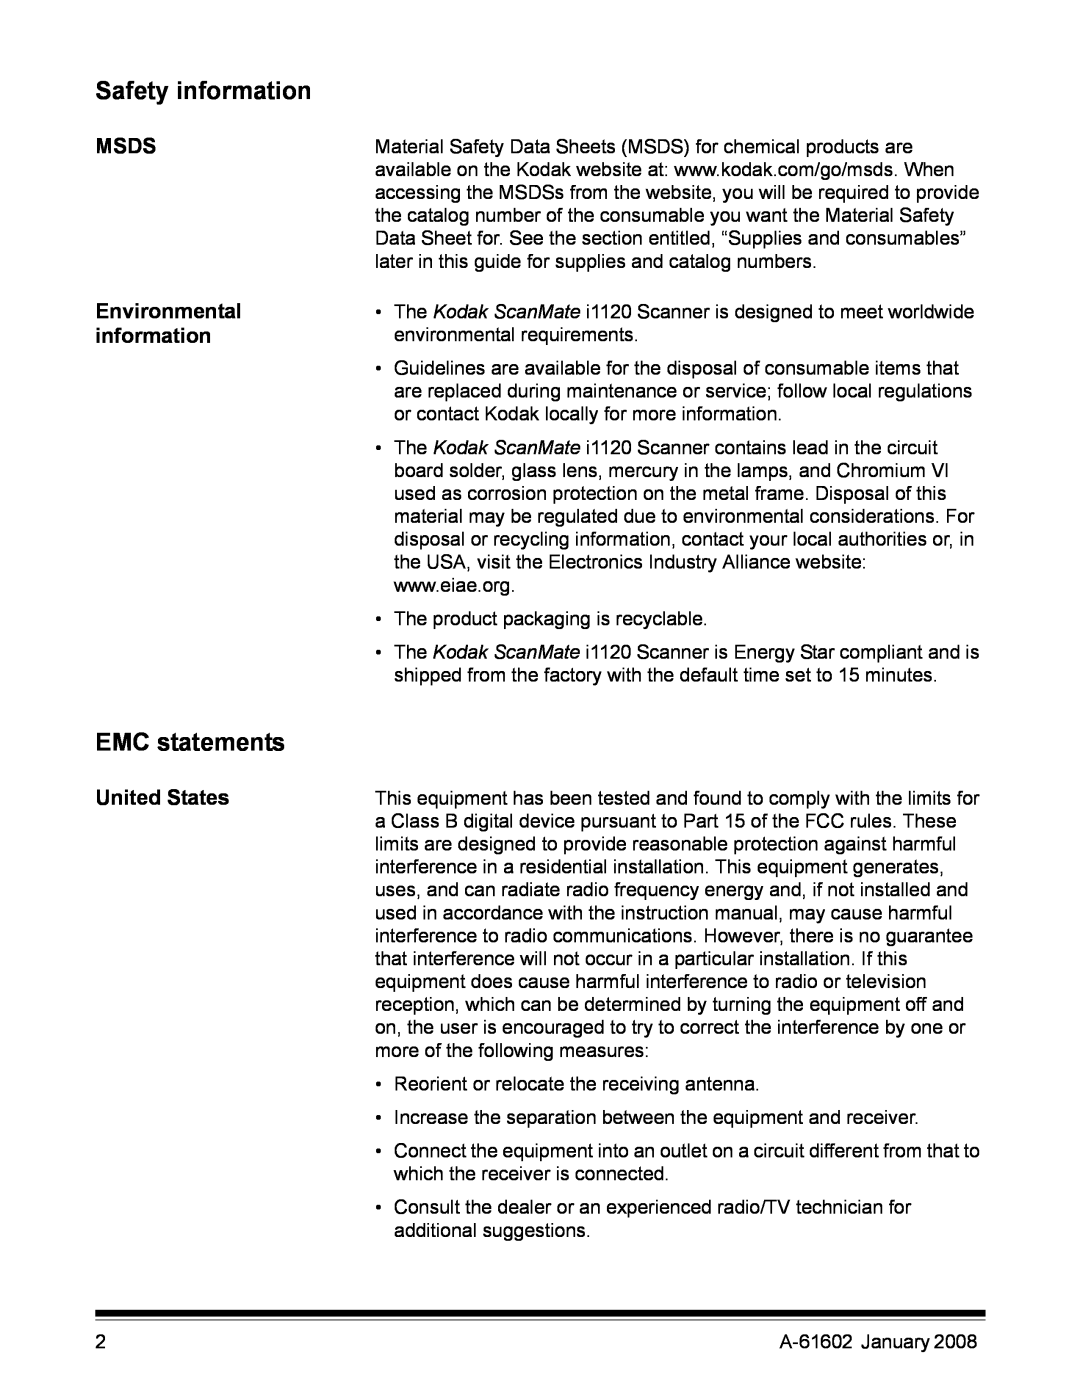 Kodak A-61602 manual Safety information, EMC statements, Msds, Environmental information, United States 